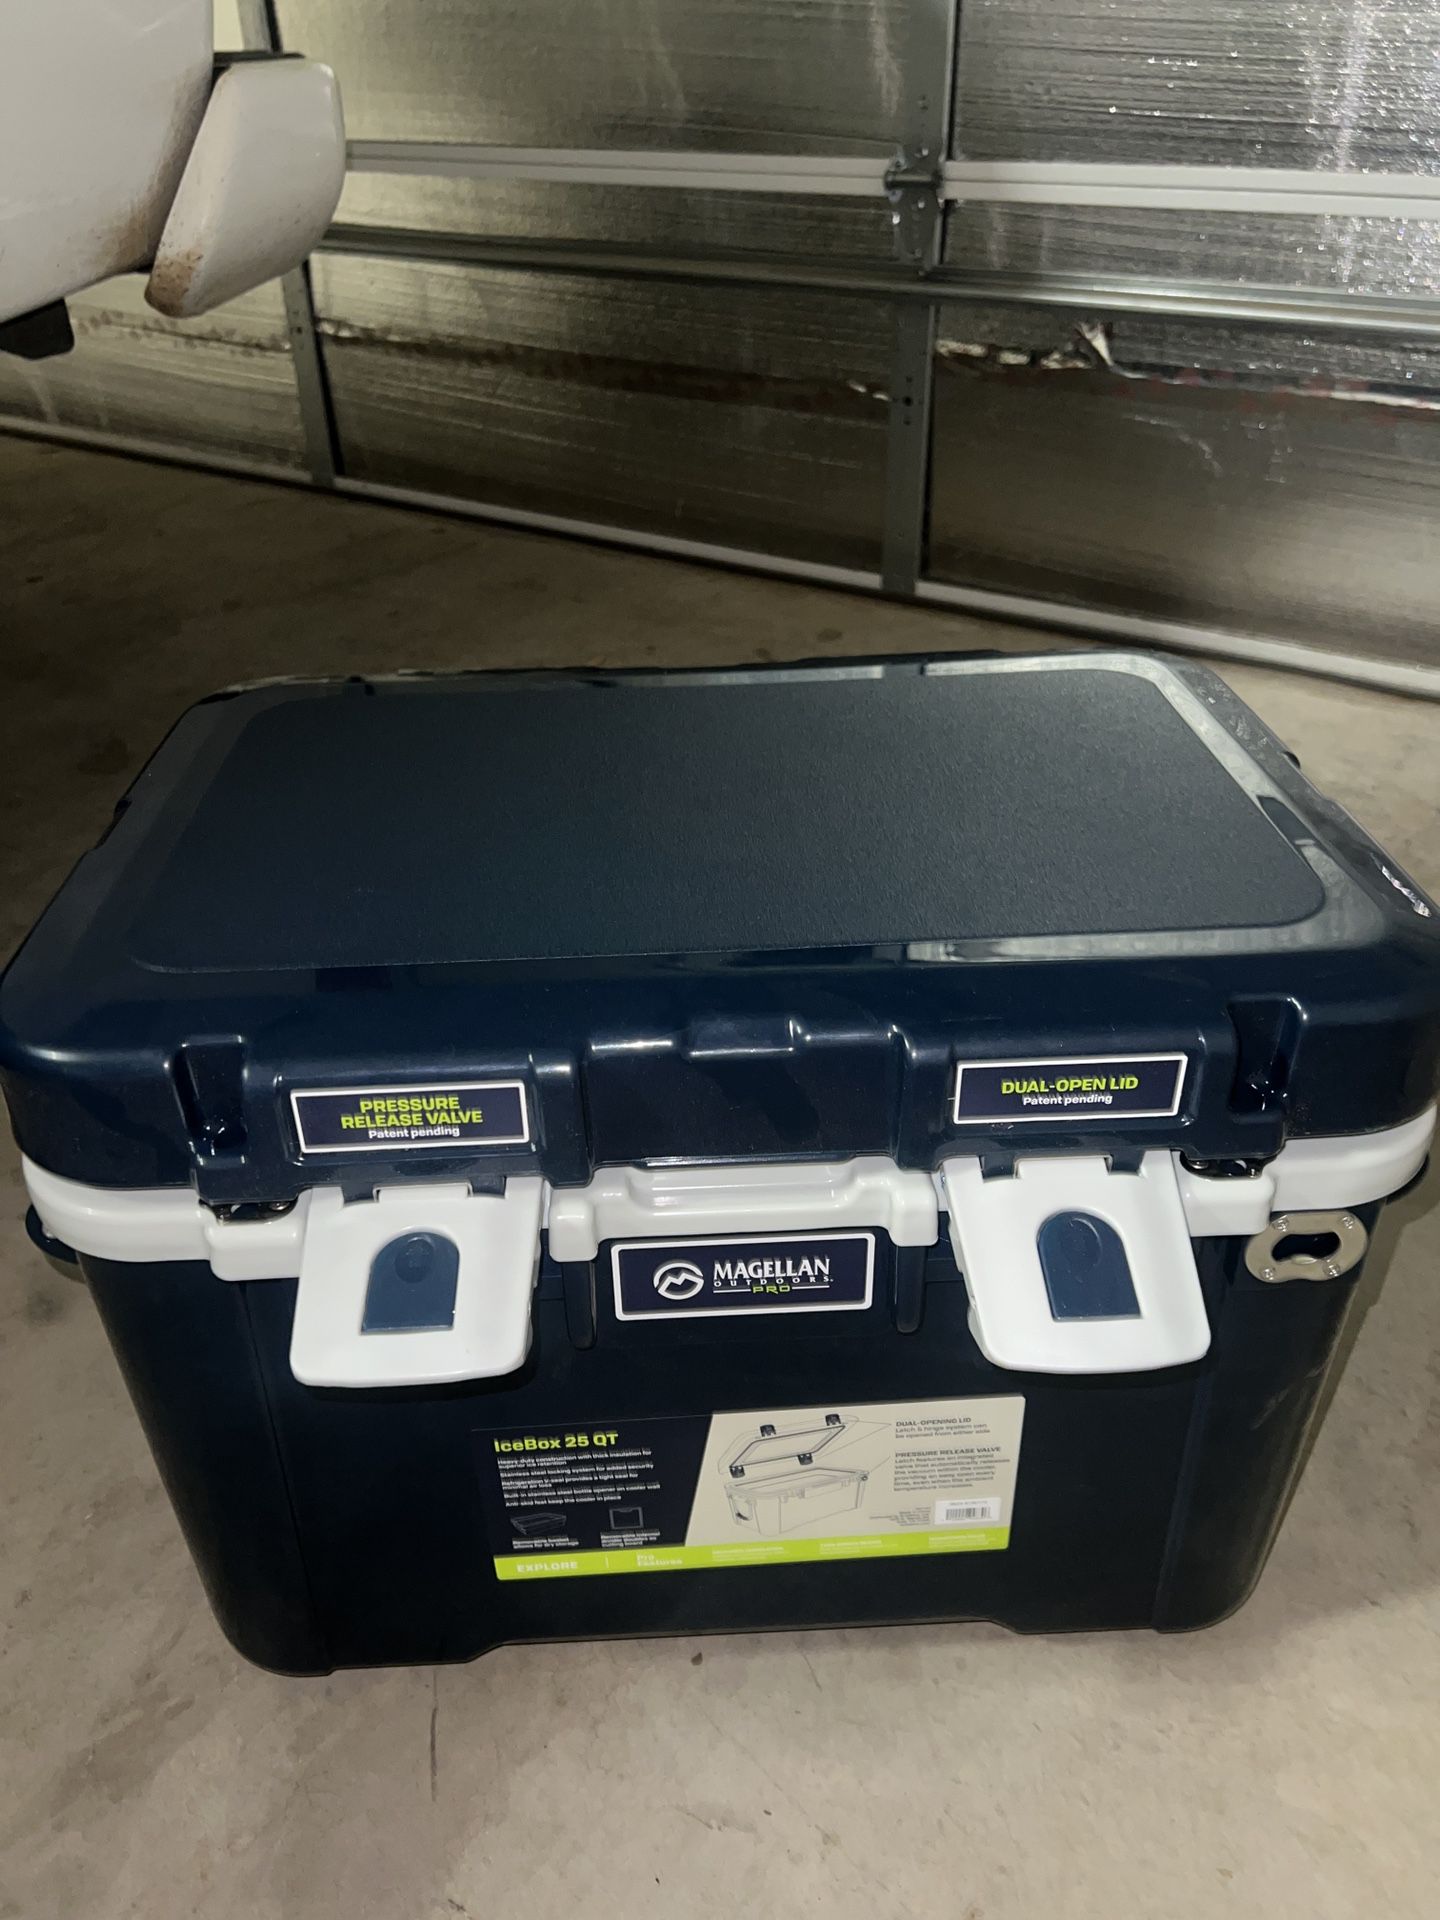 BRAND NEW : Magellan Outdoors Pro Explore IceBox 25 Cooler